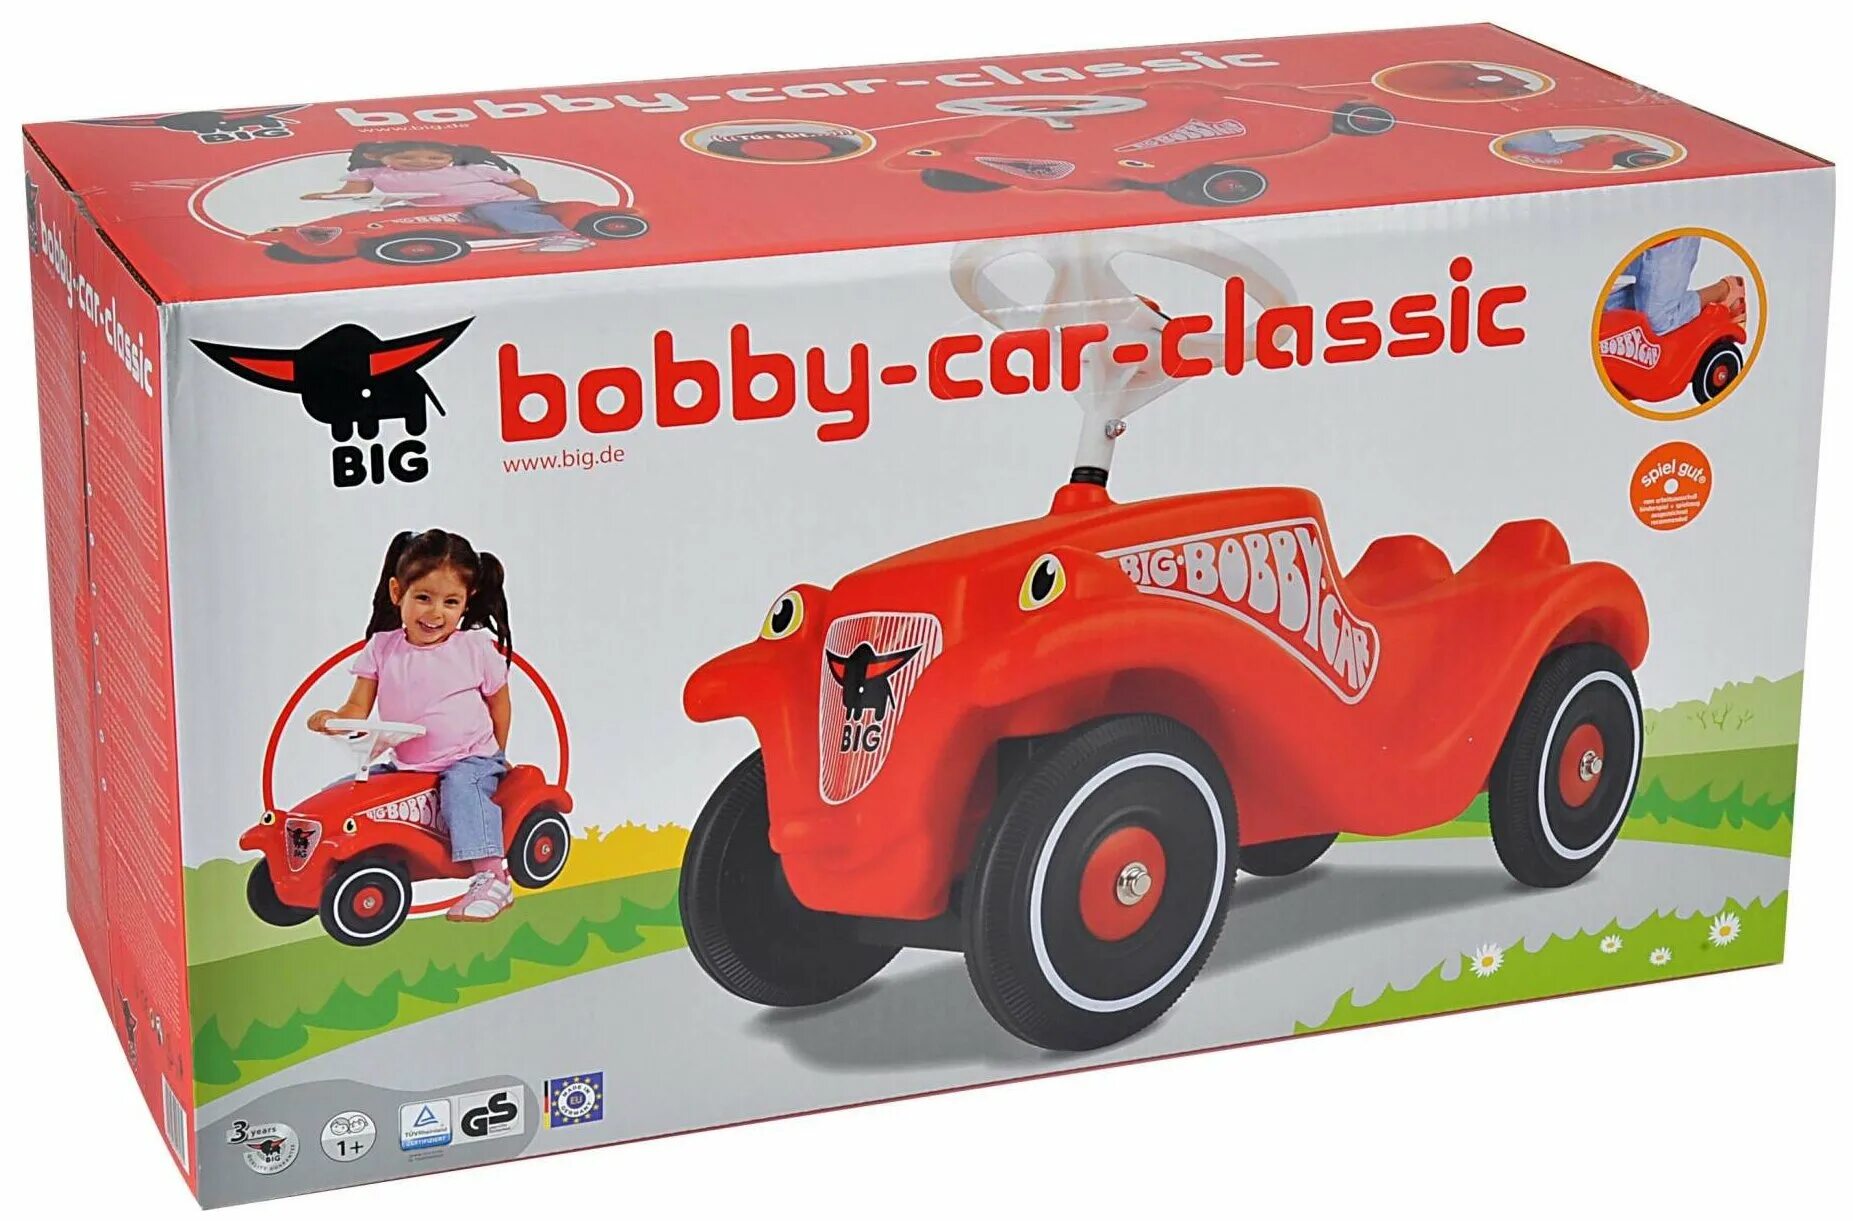 Bobby car Classic 1303. Каталка-толокар big Bobby car Classic Dolphin (1309) со звуковыми эффектами. Красные машинки игрушки Bobby car. Машинка big Bobby вид снизу. Включи машина бобби